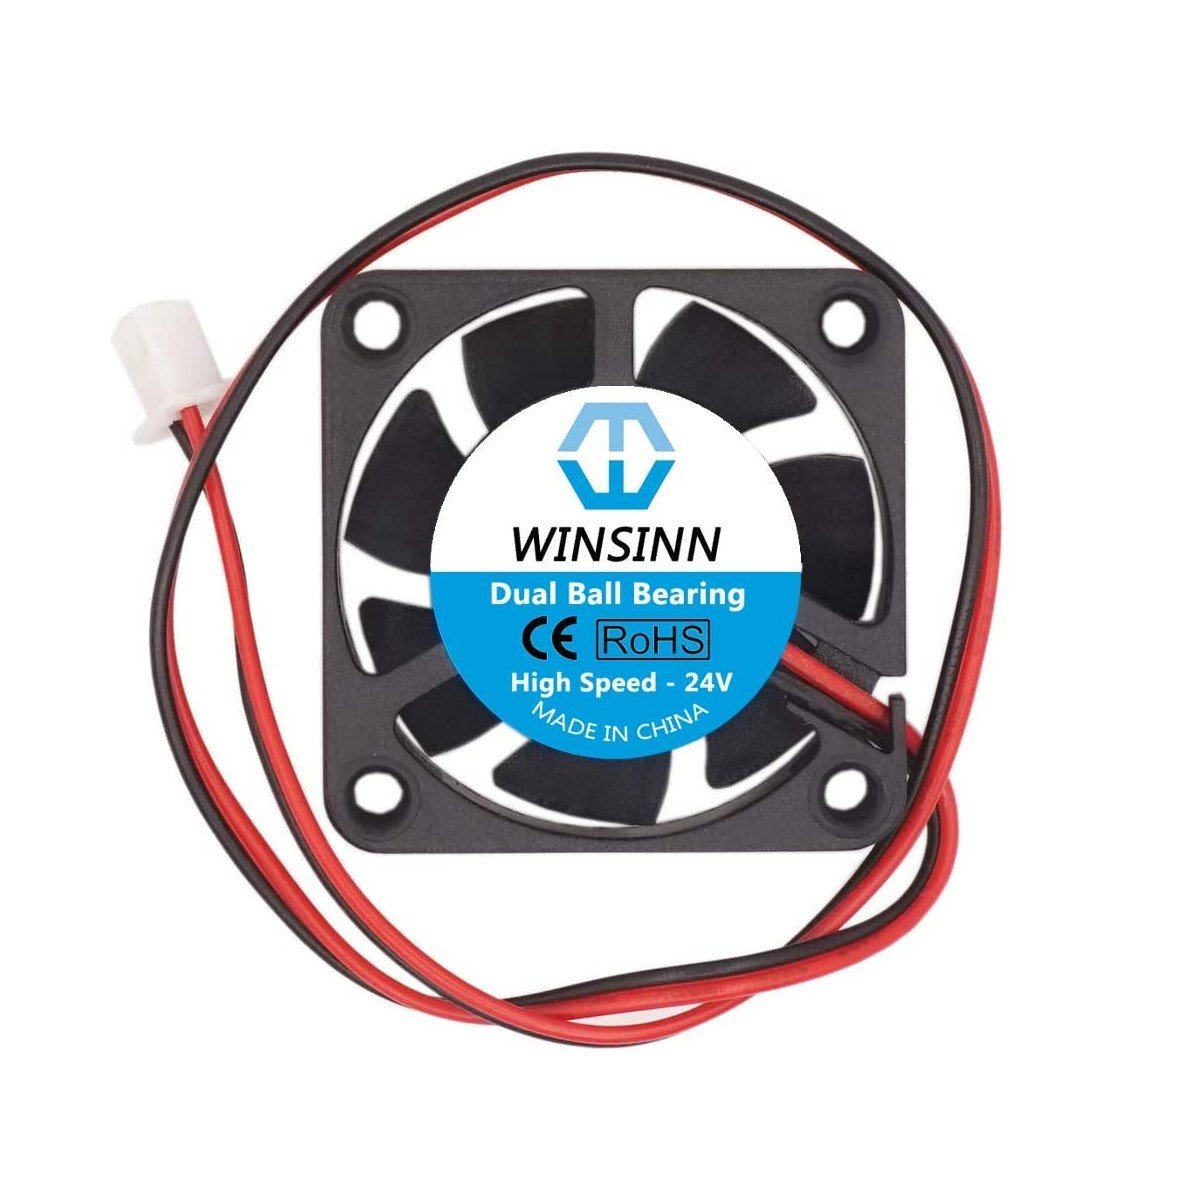 WINSINN 40mm 24V Brushless Dual Ball Bearing Hotend Cooling Fan 4010 (40x10mm) - High Speed Version